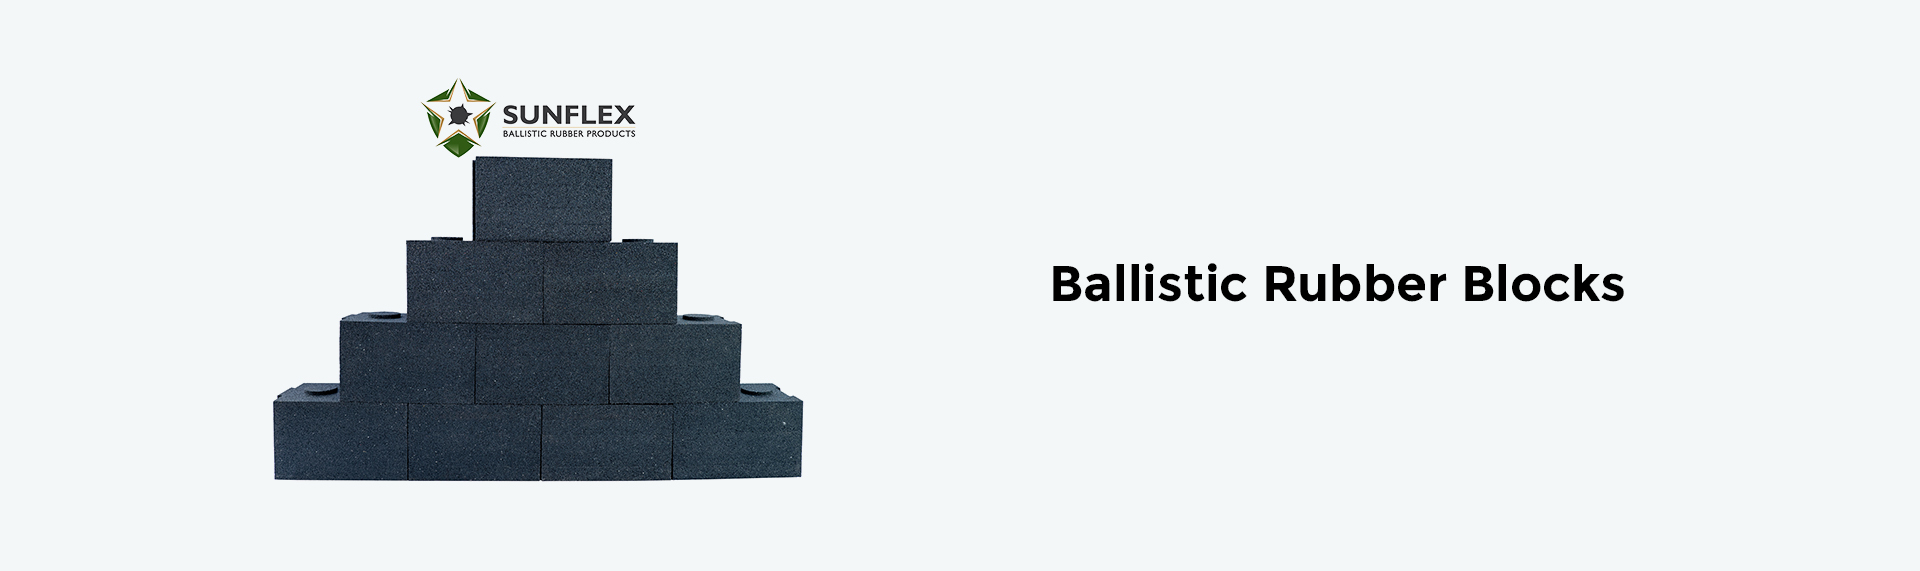 3-Ballistic-Rubber-Blocks